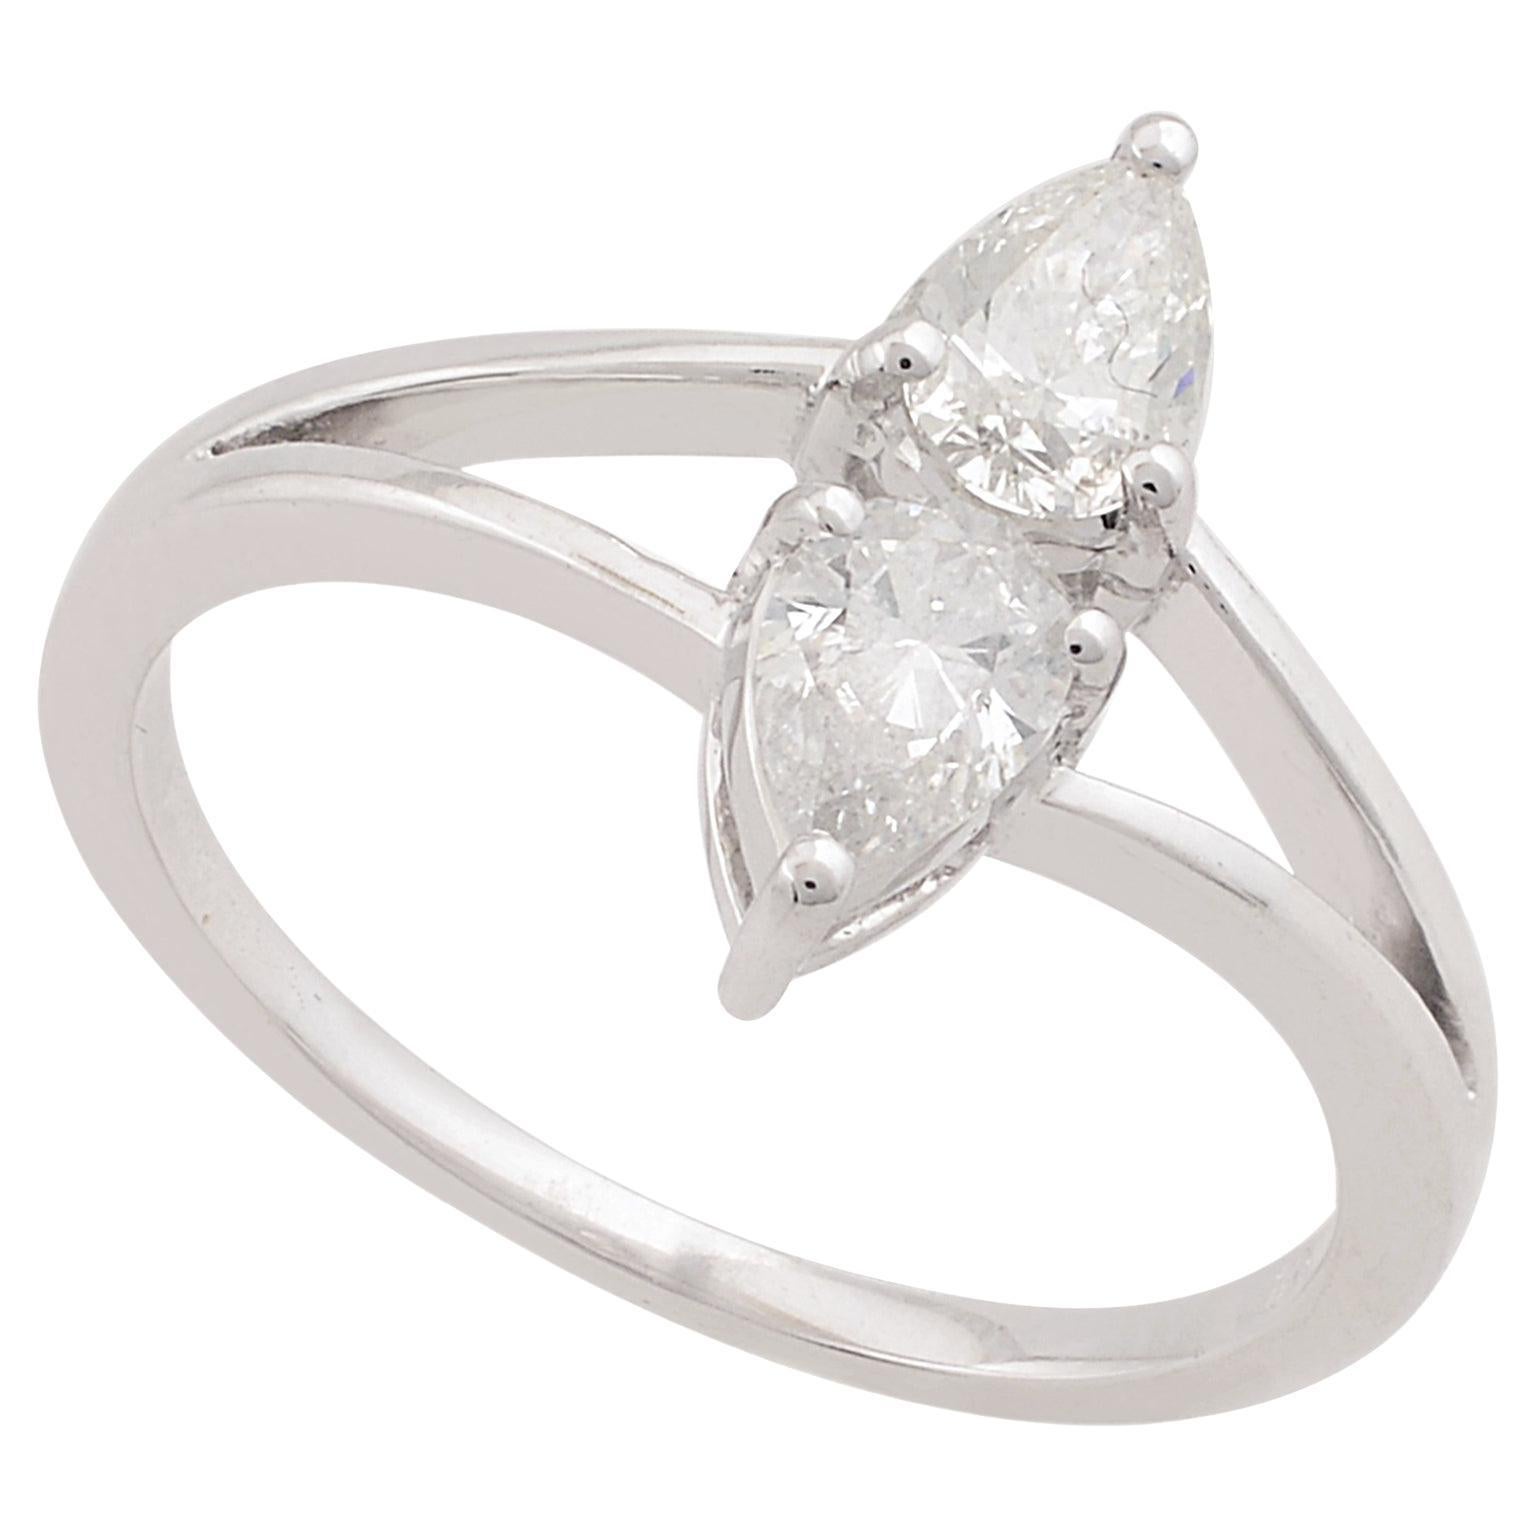 0.63 Carat SI Clarity HI Color Pear Shape Diamond Ring 14k White Gold Jewelry